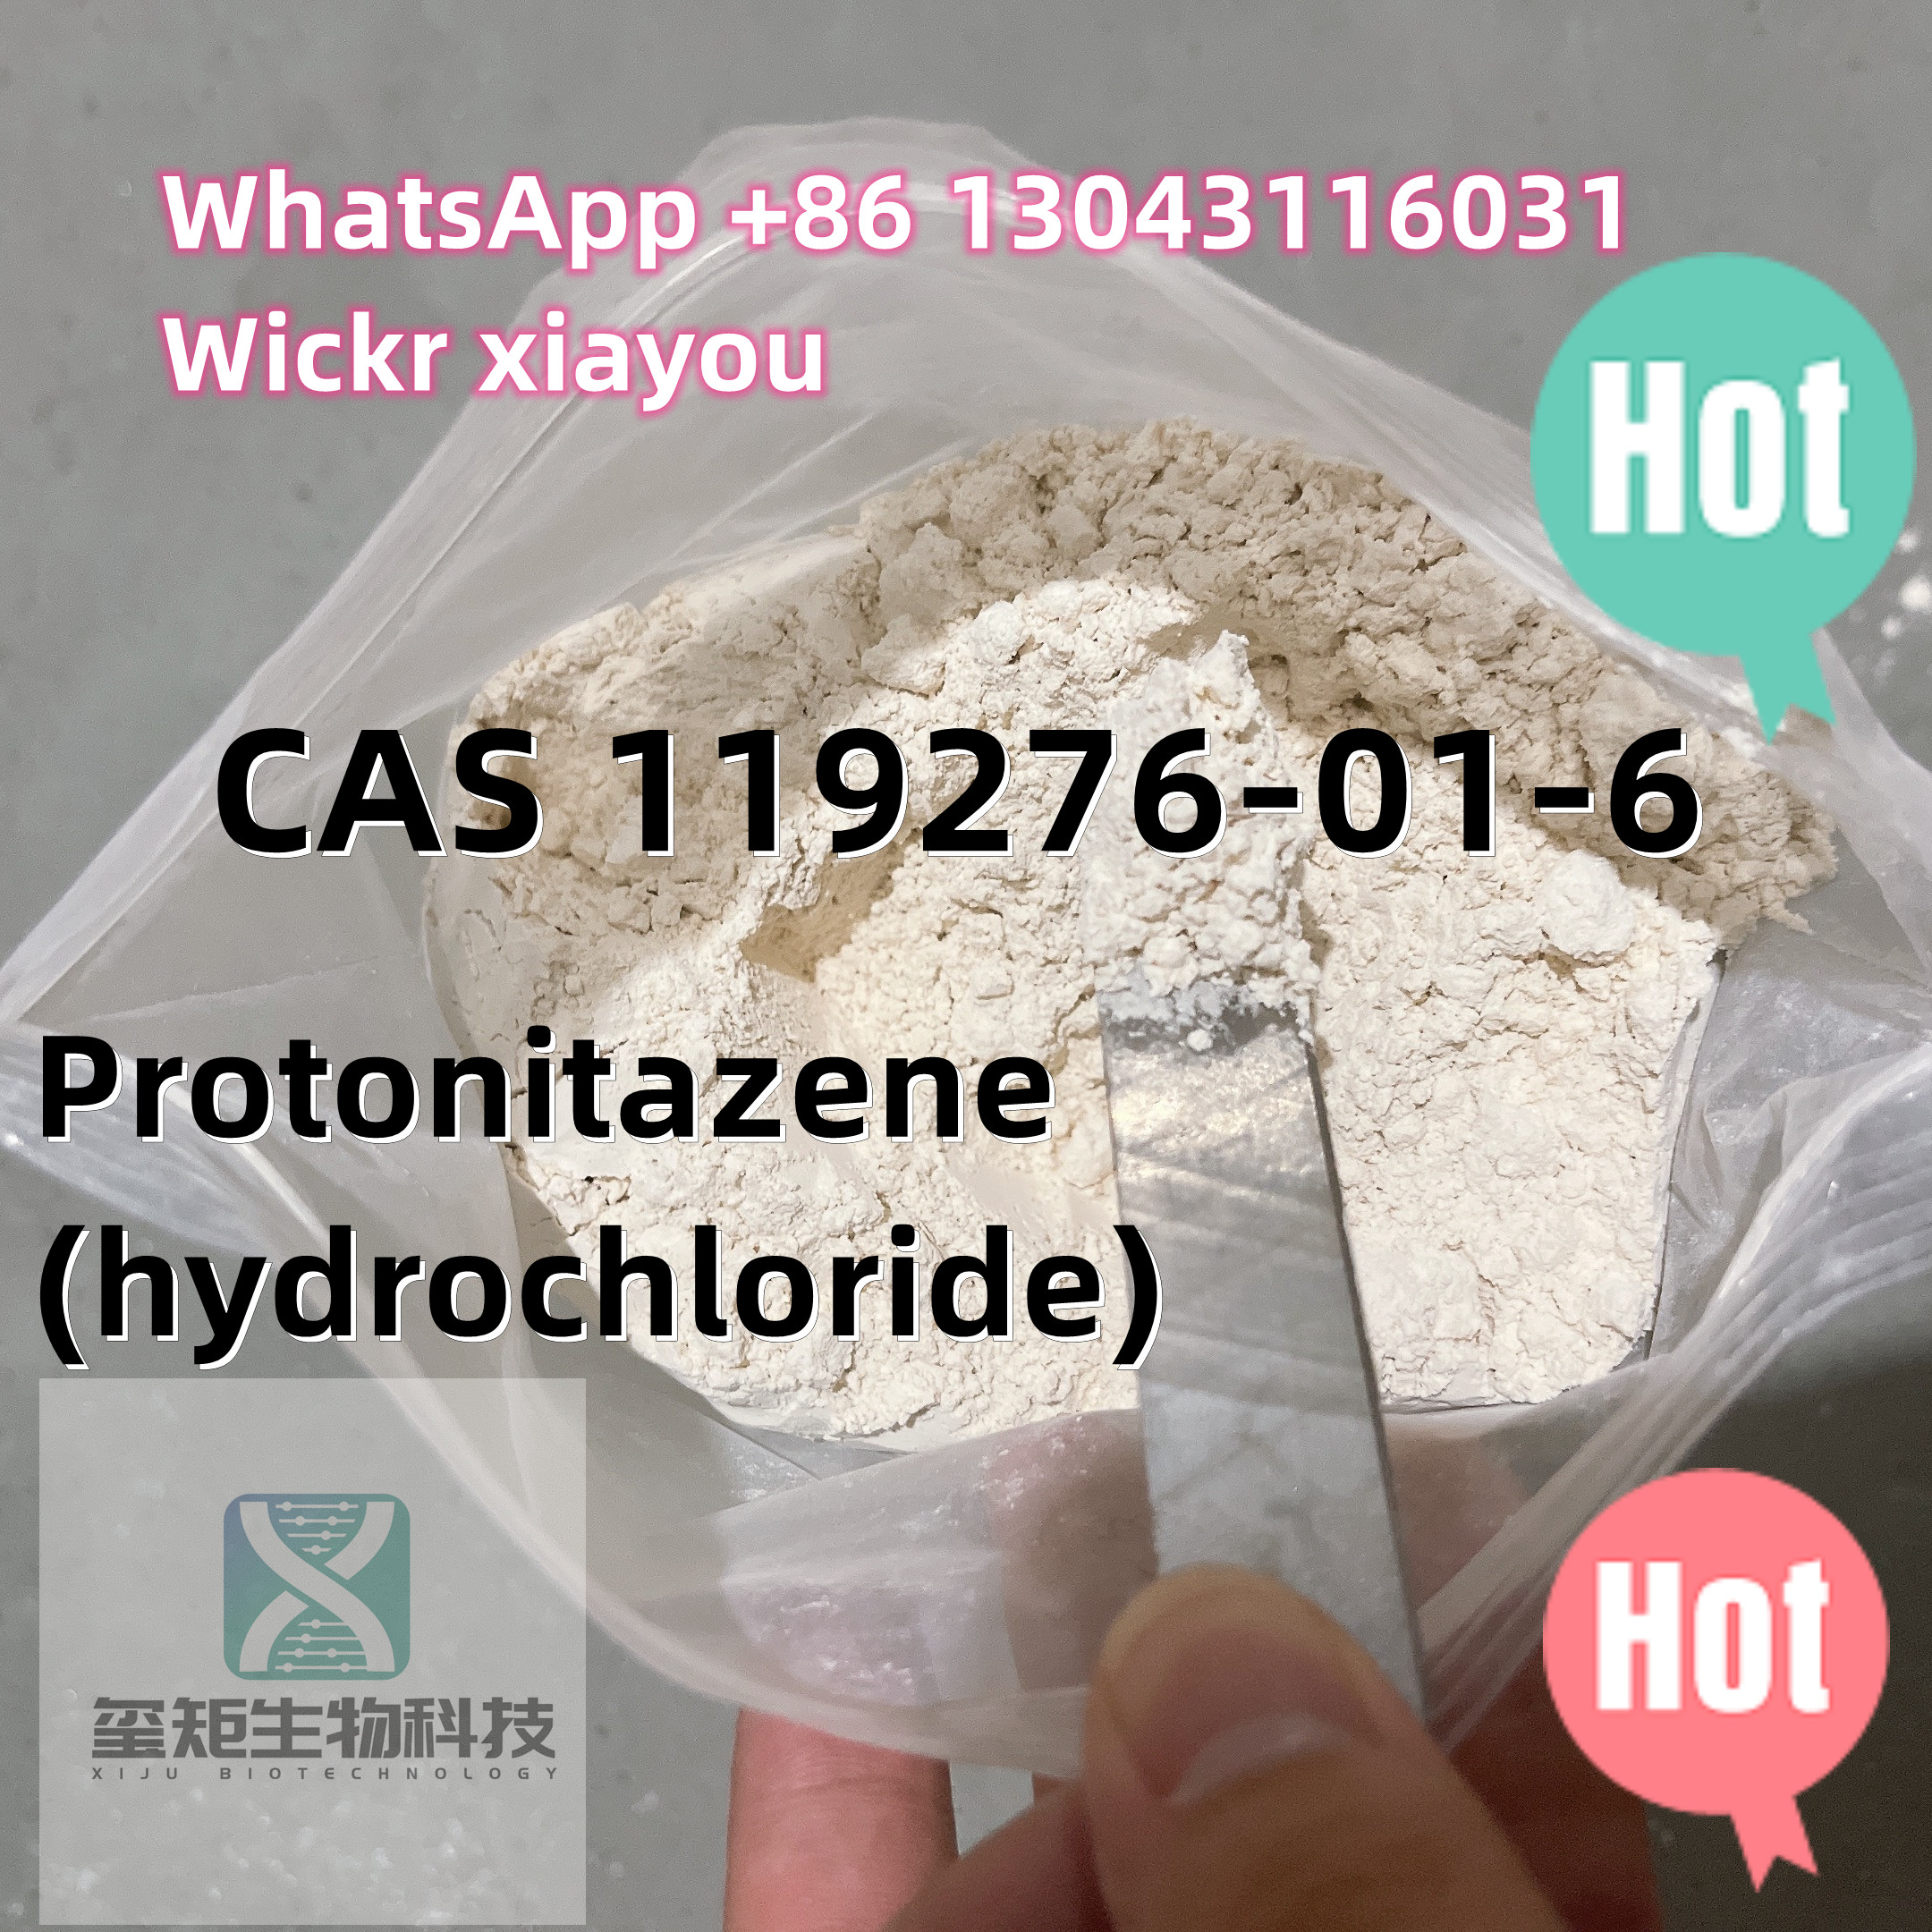 Най-високо качество 99% чистота на прах протонитазен-хидрохлорид CAS 119276-01-6, Threema: 9JPV7VEE, Wickr ME：xiayou